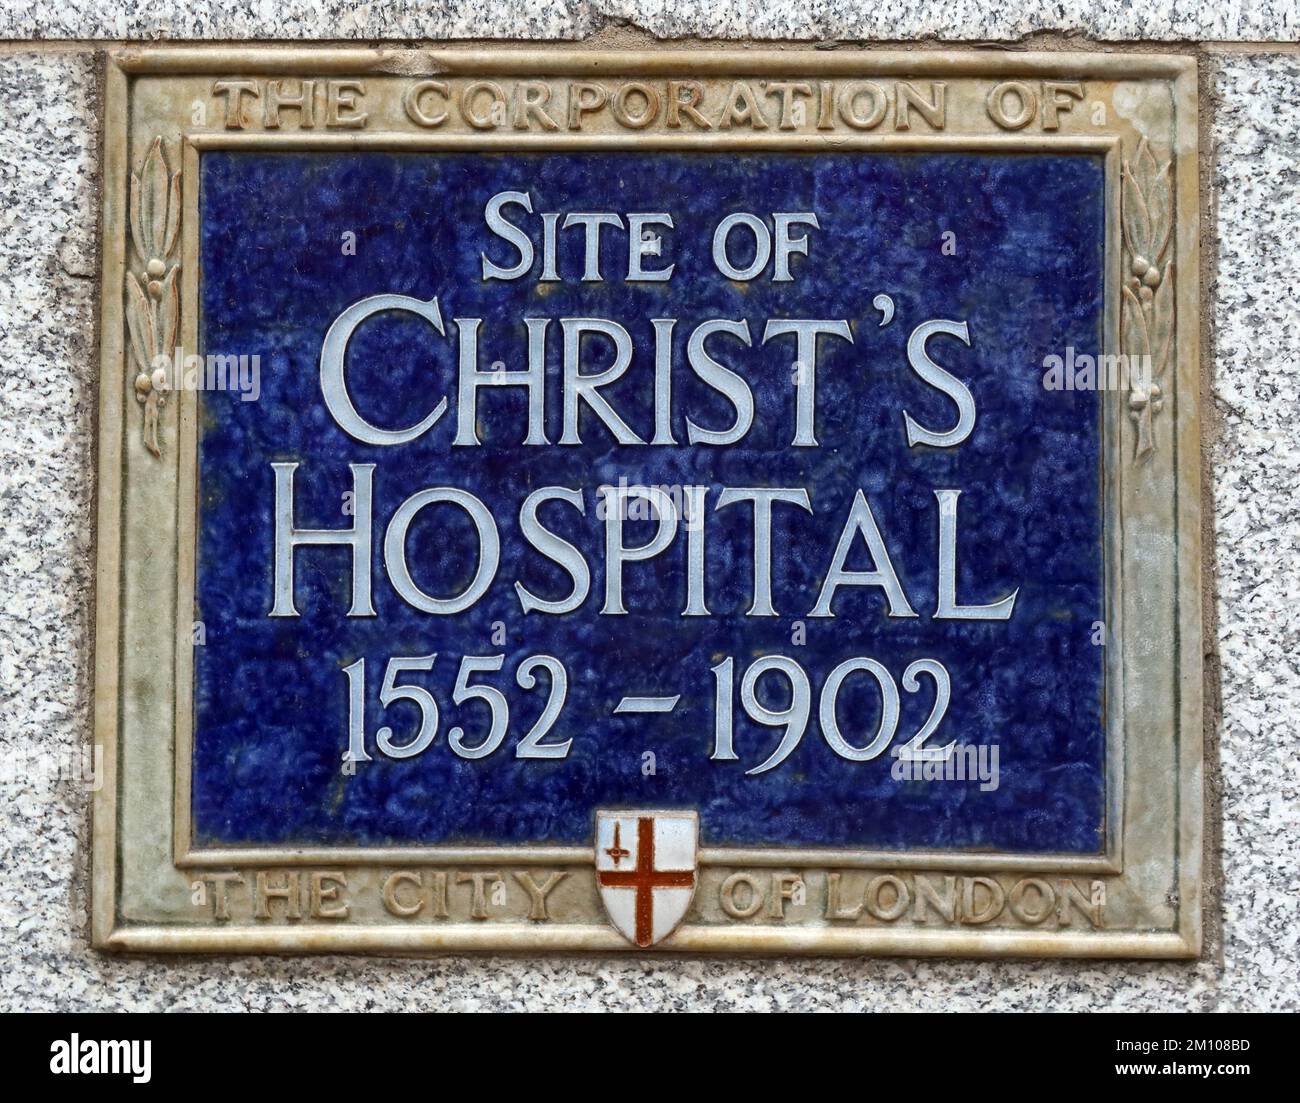 Site of Christs Hospital 1552-1902, city of London plaque, Christchurch, Newgate Street, London, England, UK, EC1A 7AJ Stock Photo